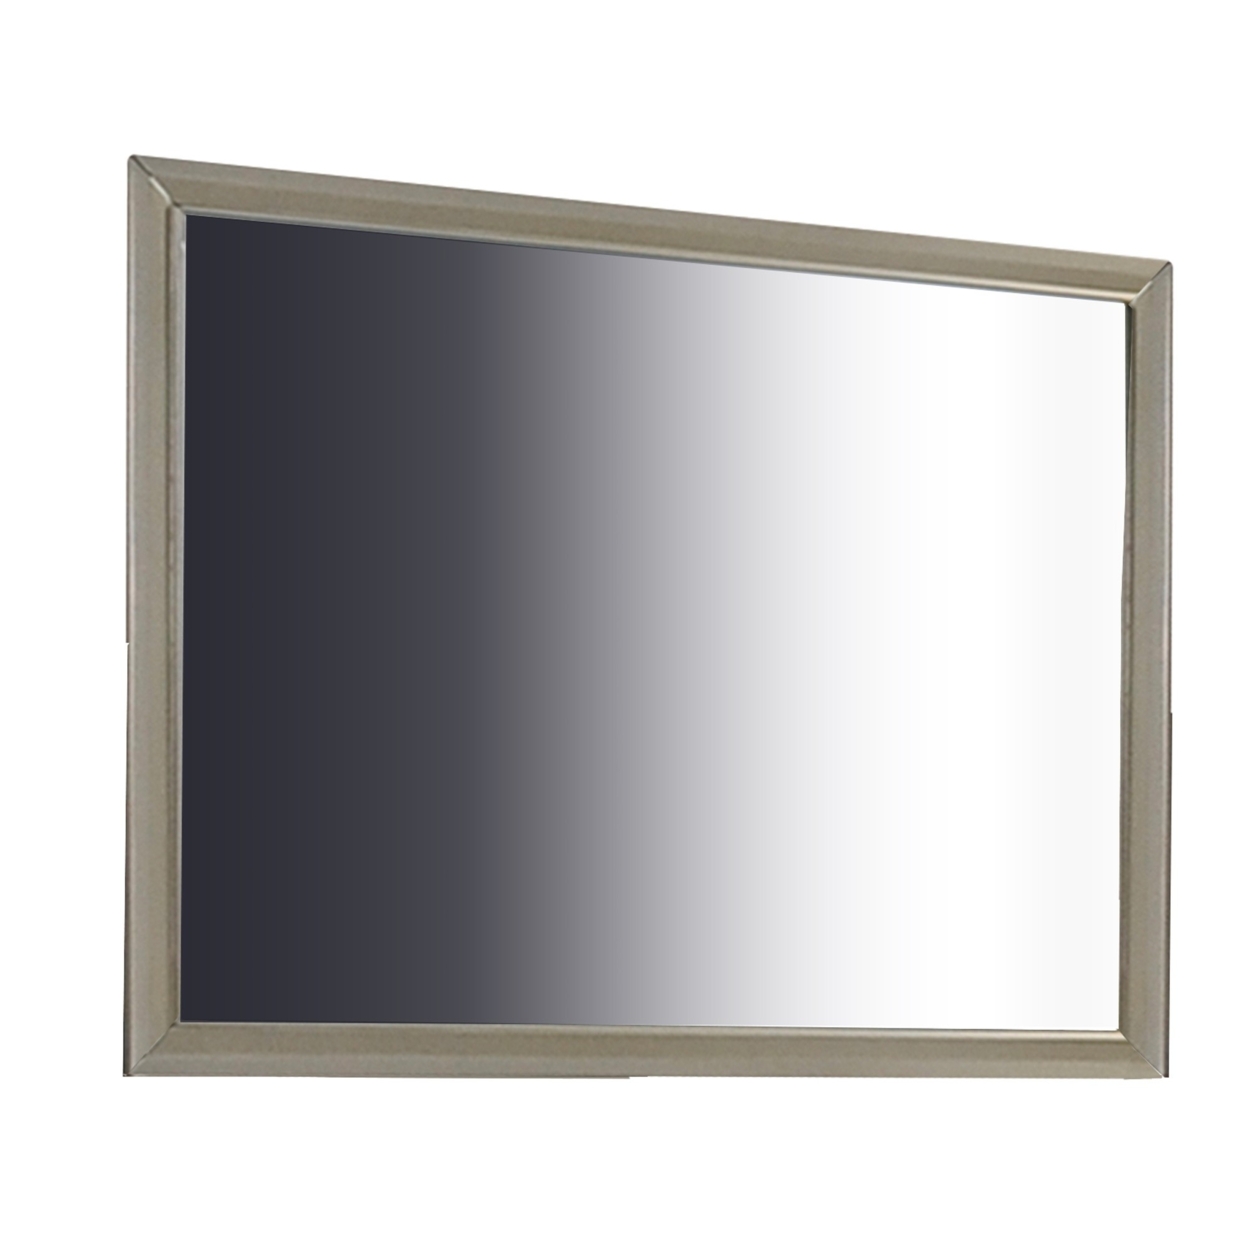 Wooden Clean Lines Framed Mirror With Rectangular Shape, Silver- Saltoro Sherpi